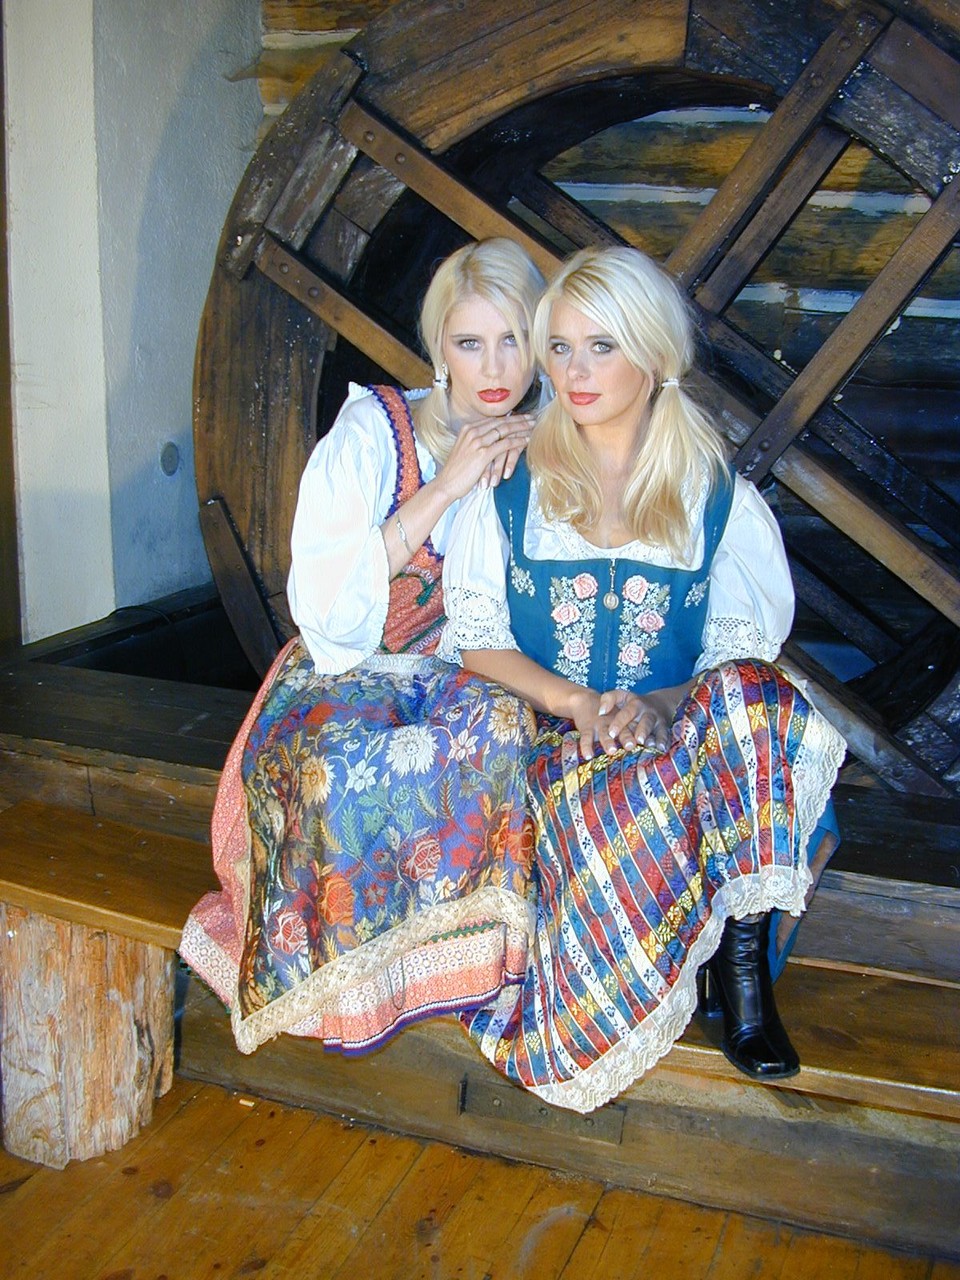 Teen Dreams Swedish Sisters 포르노 사진 #428182736 | Teen Dreams Pics, Swedish Sisters, Boots, 모바일 포르노